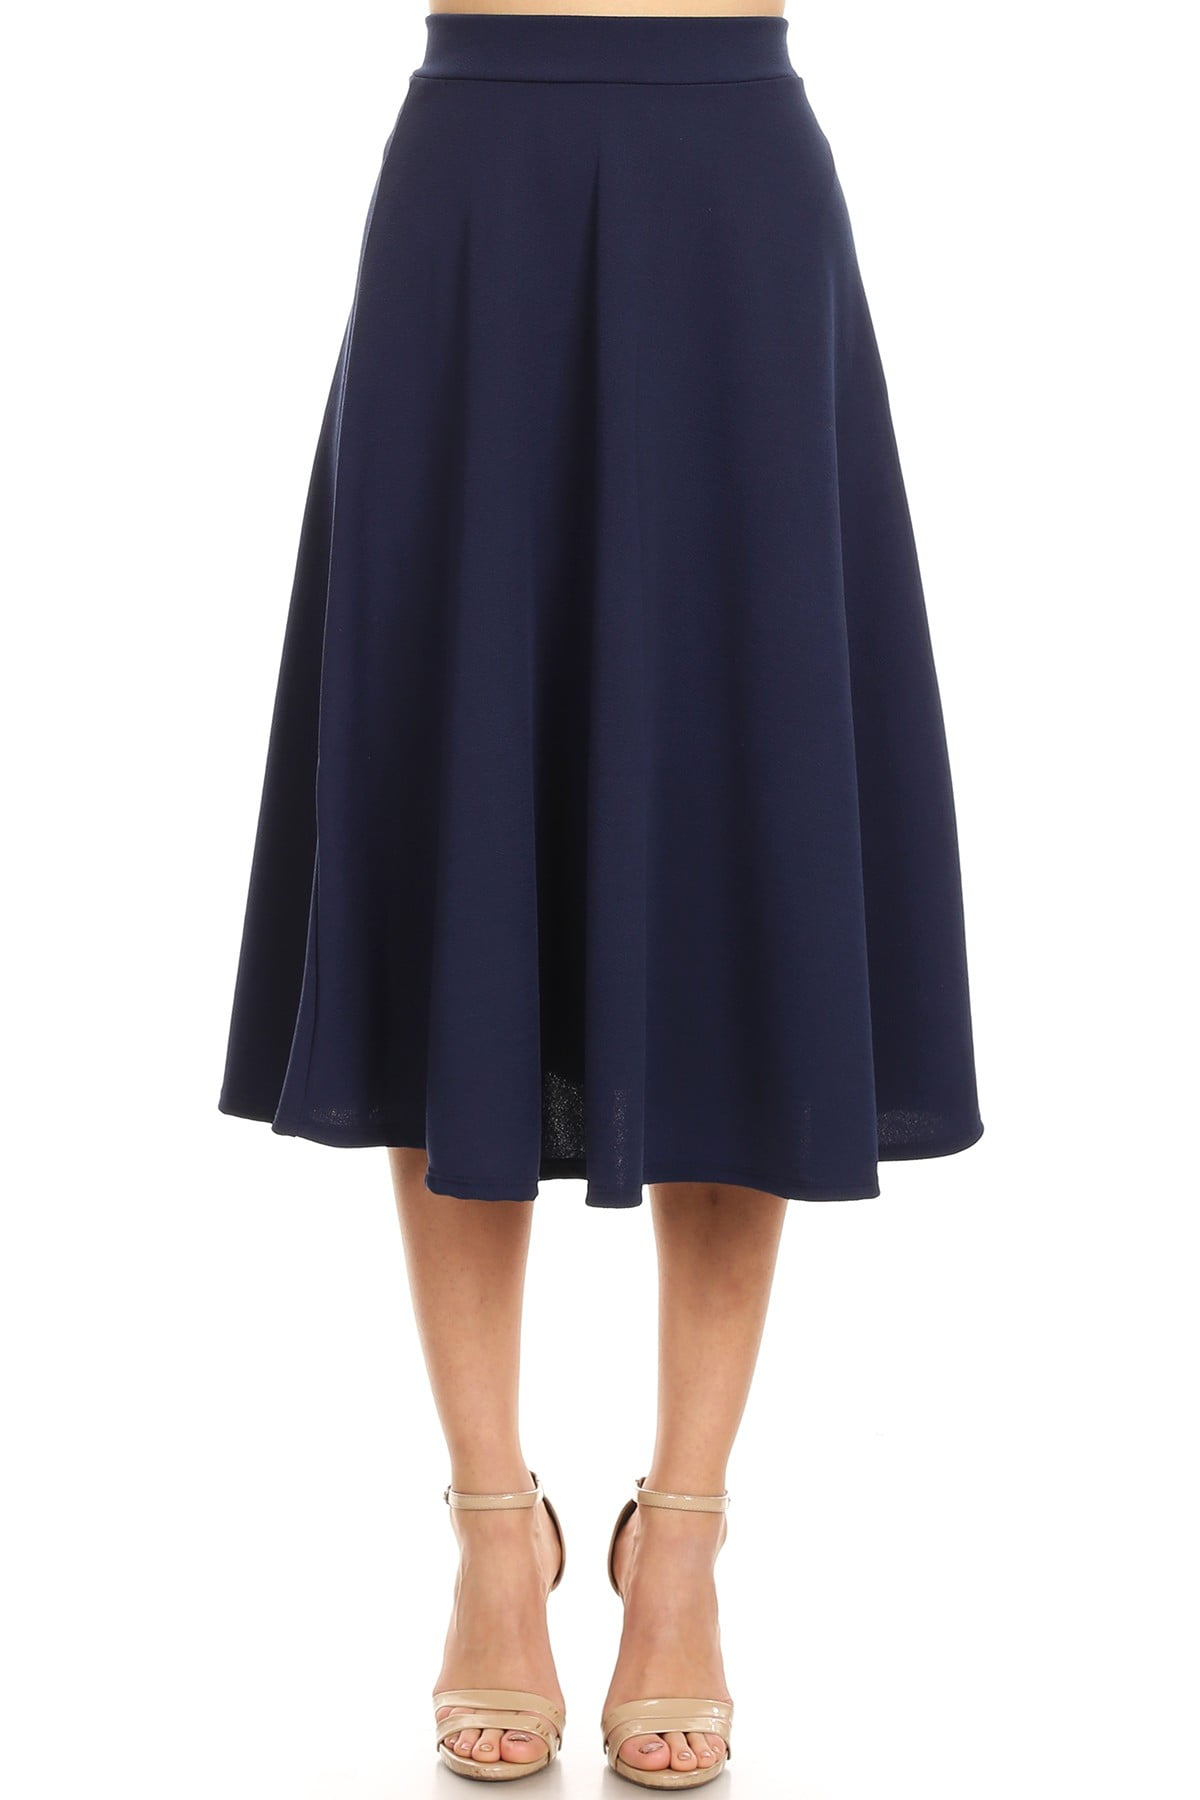 Women's Solid Basic Casual Elastic Waist A-line Flared Midi Skirt S-3XL ...